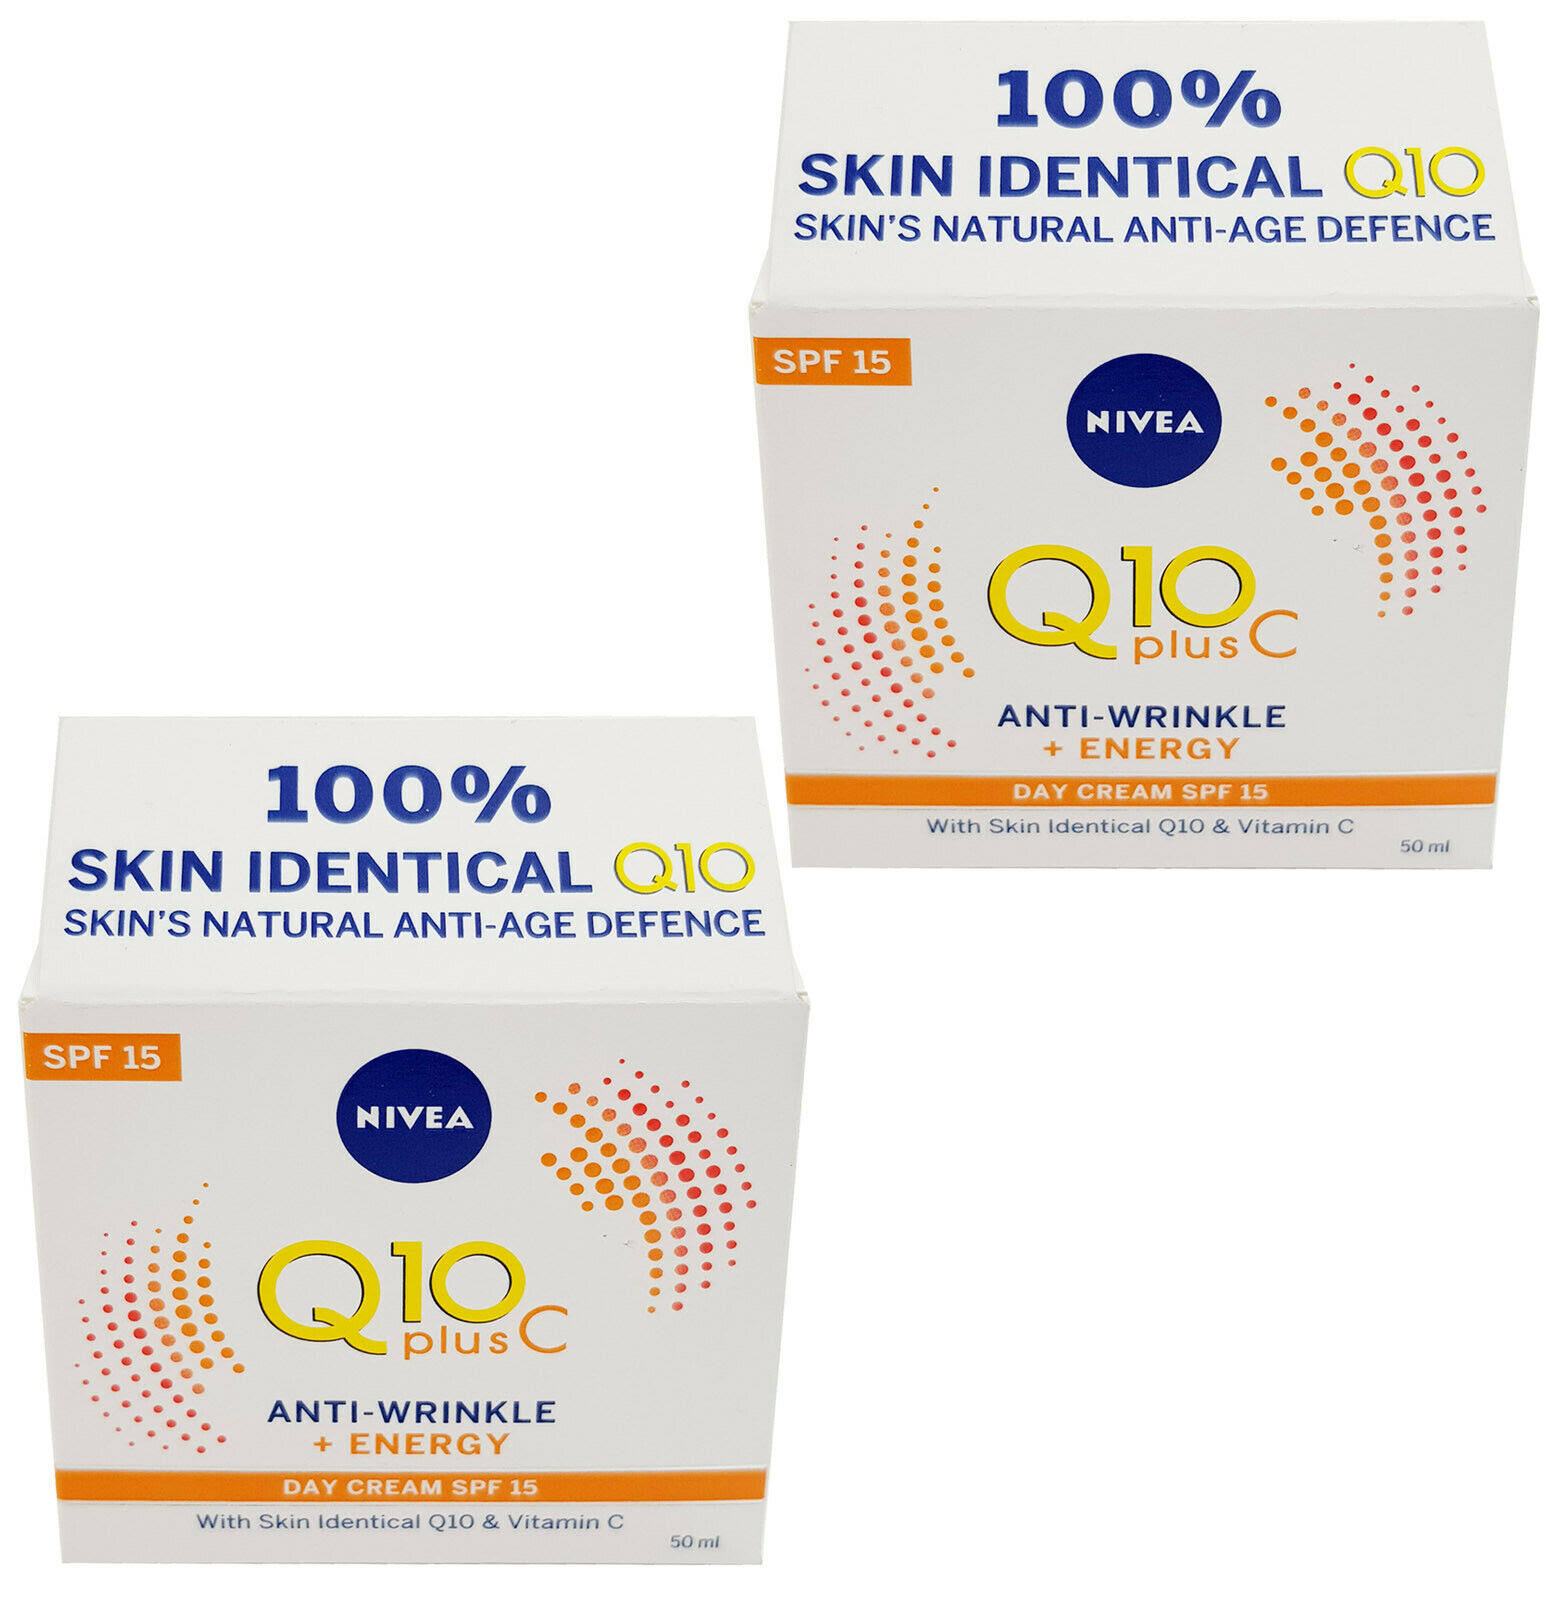 Nivea Q10 Plus C Anti-Wrinkle + Energy Day Cream - 50ml